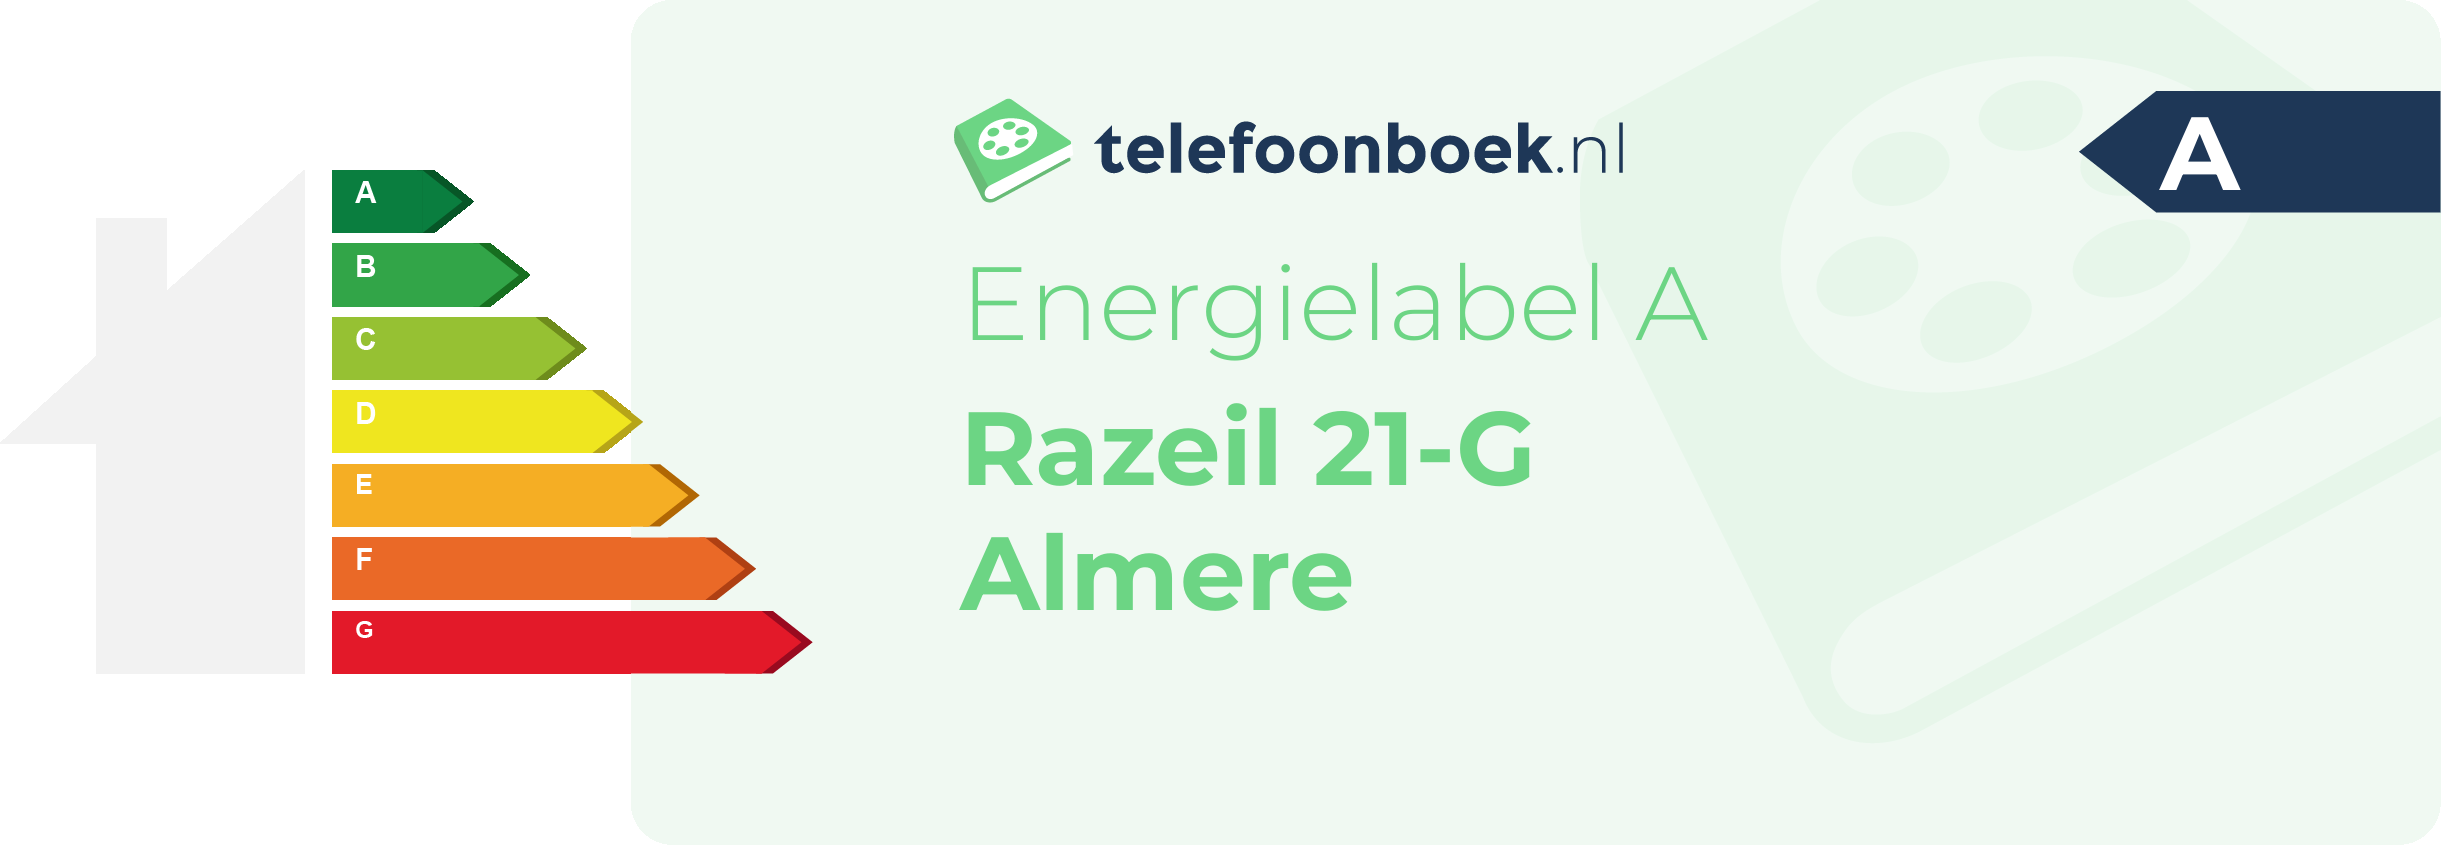 Energielabel Razeil 21-G Almere